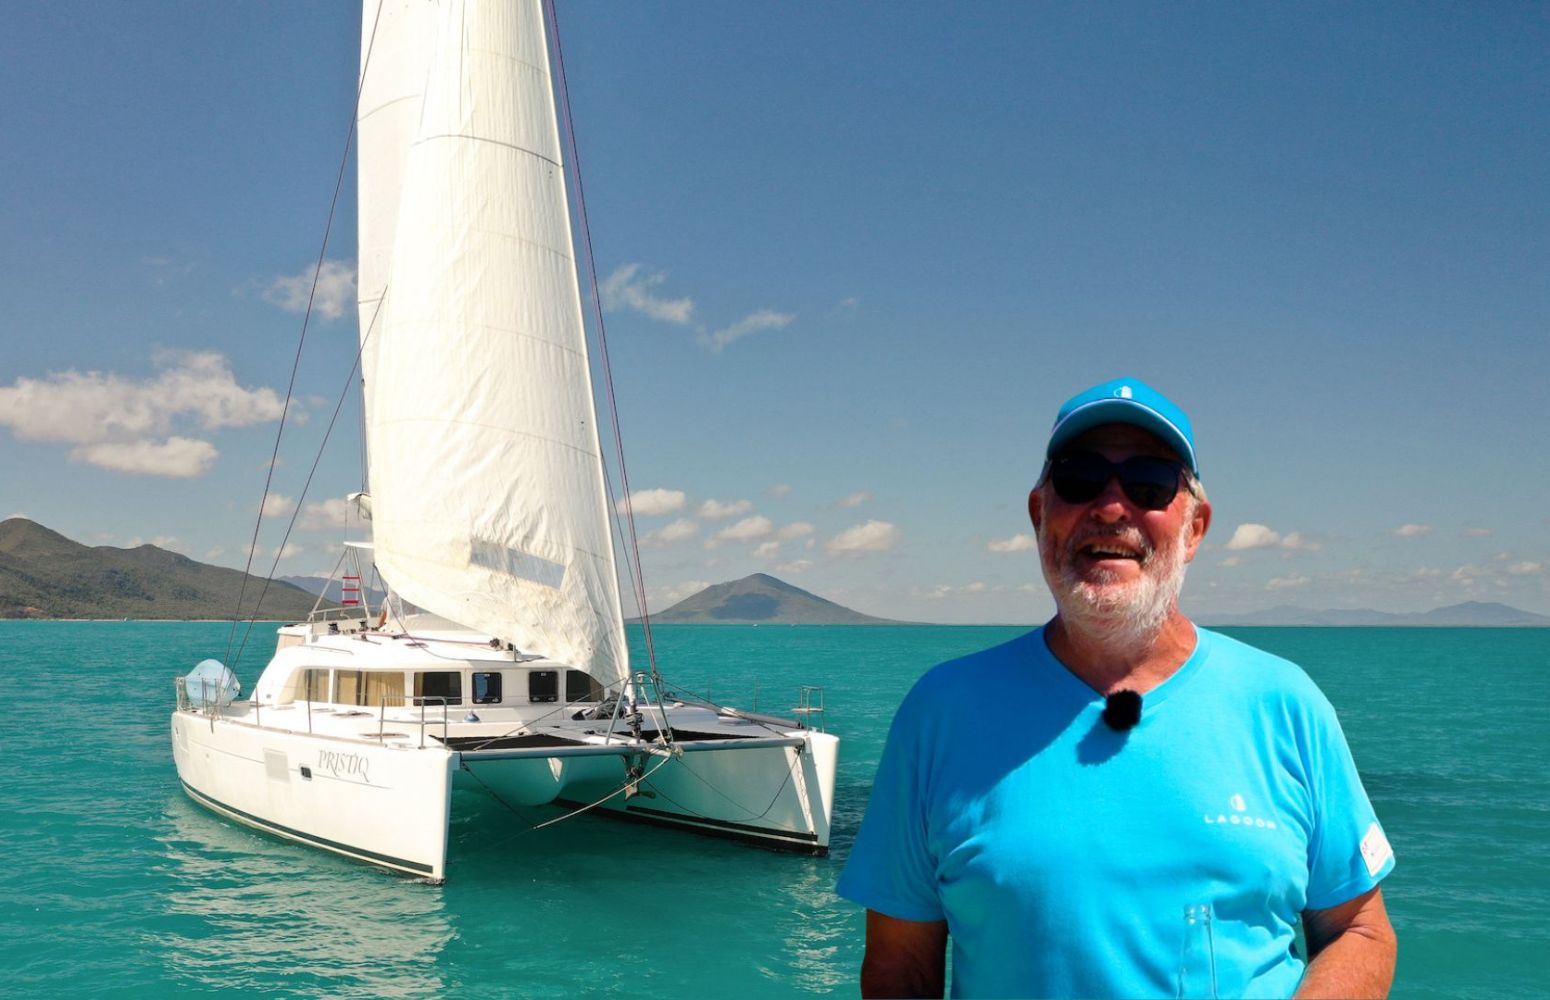 Sailing The World On A Lagoon Catamaran For 13 Years